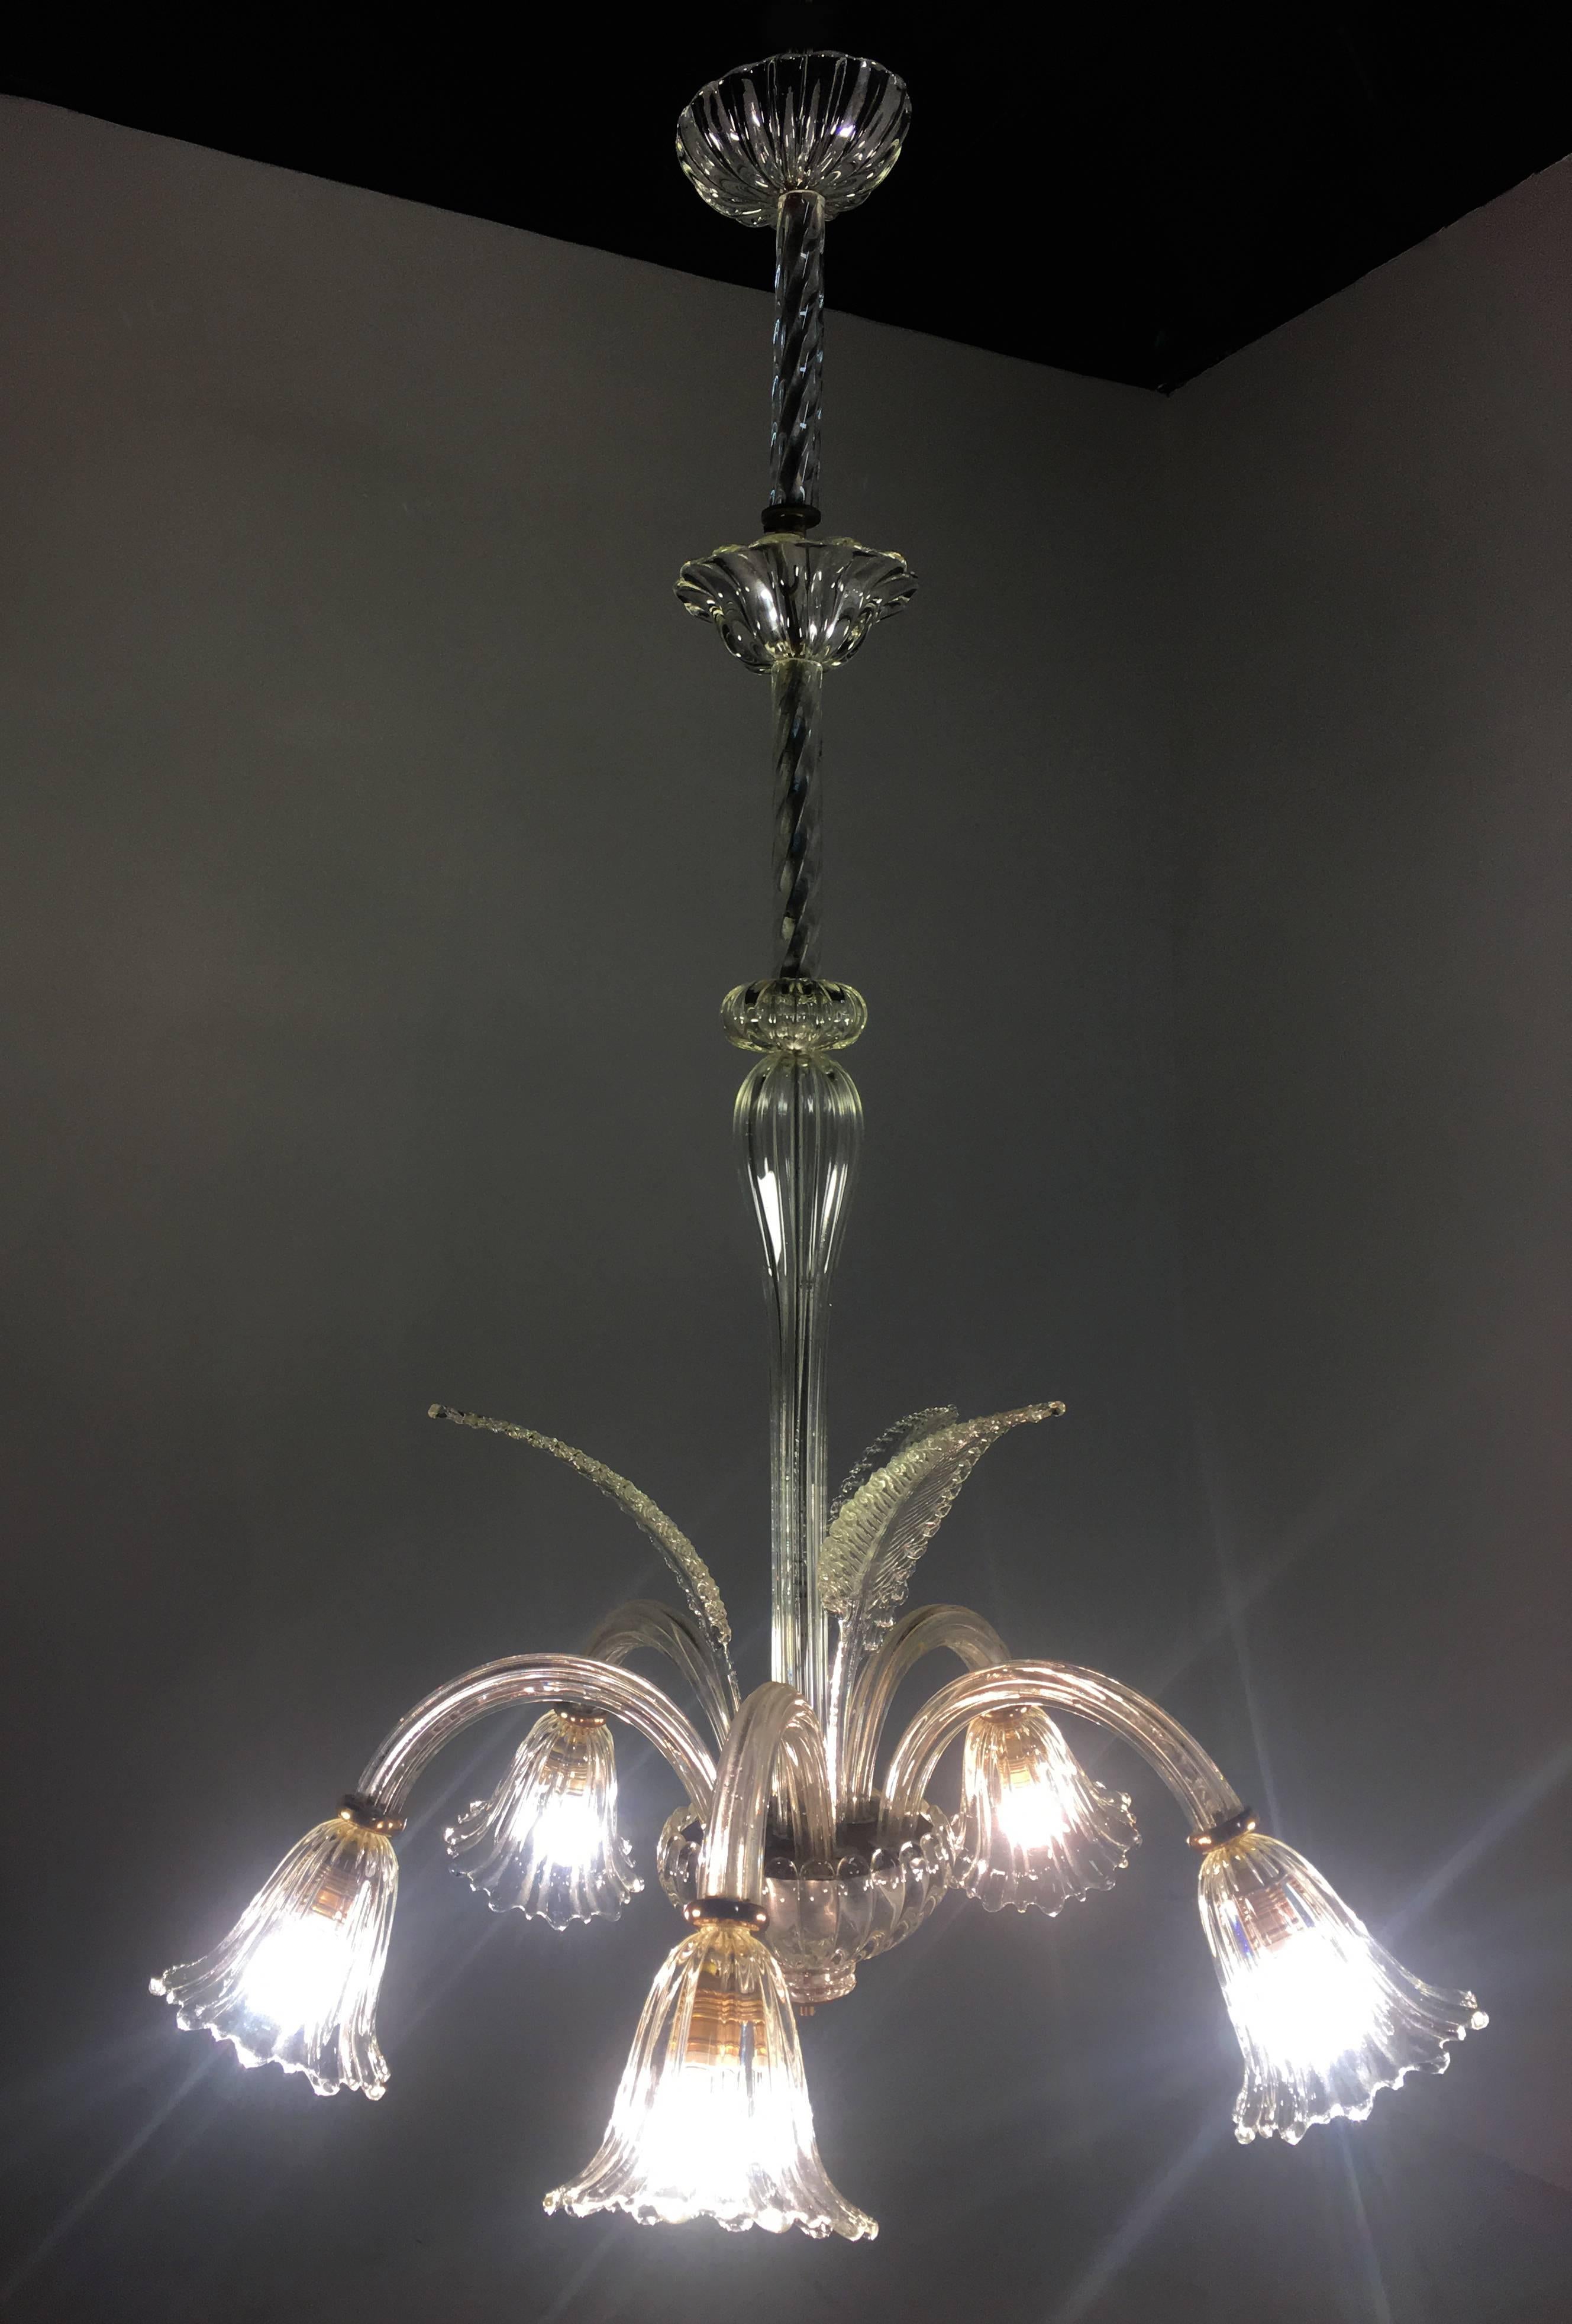 Handblown Murano chandelier by Ercole Barovier, circa 1940. From Private collection Von Plant Baron.